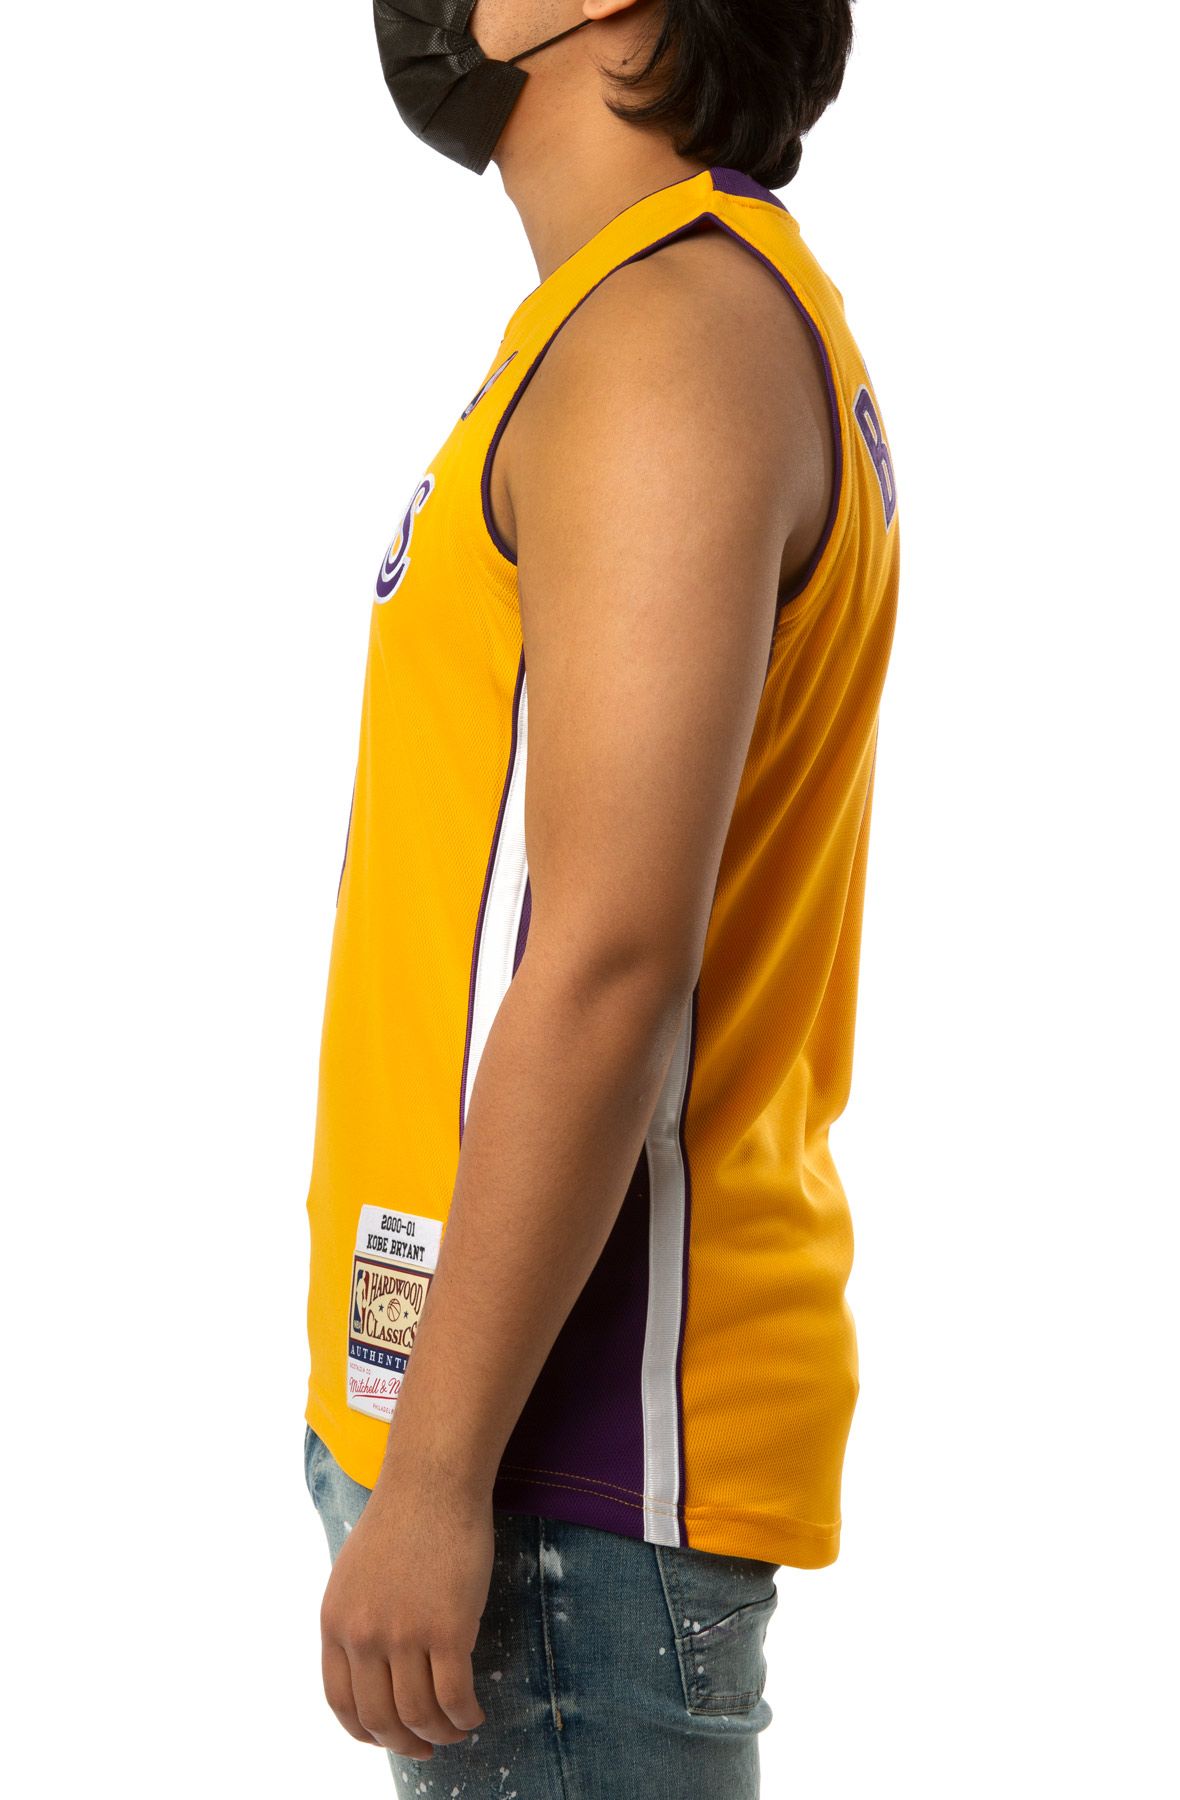 Los Angeles Lakers Kobe Bryant 2000- 01 Authentic Swingman Jersey - Yellow  - Mens